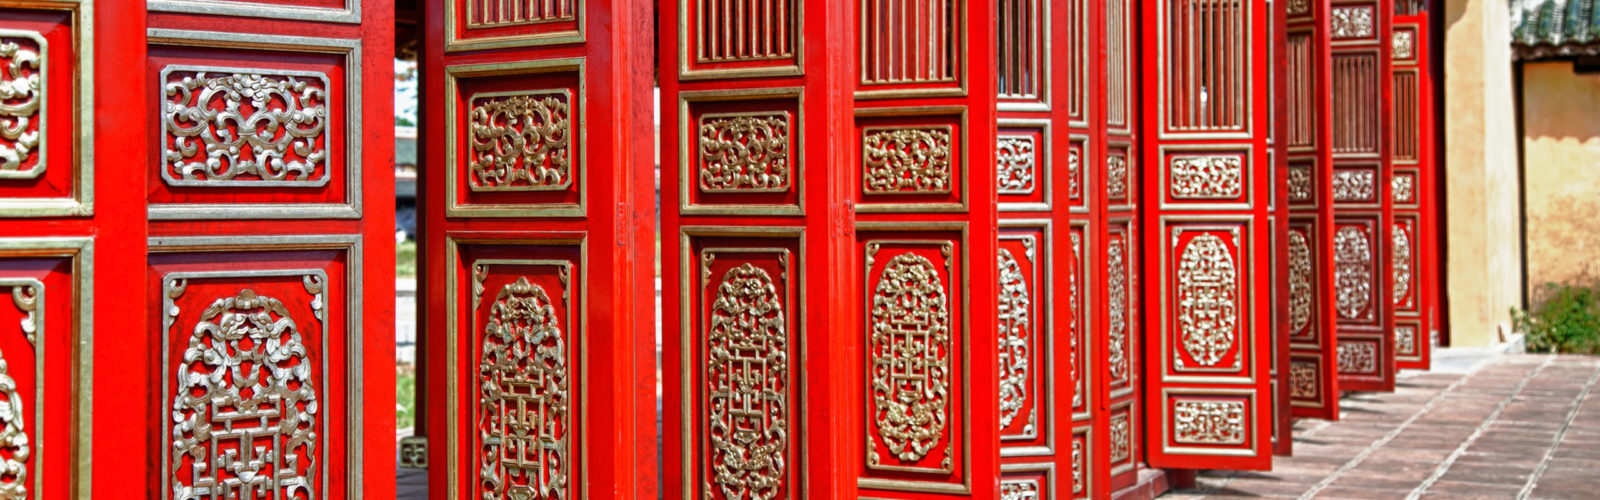 hue-red-gates